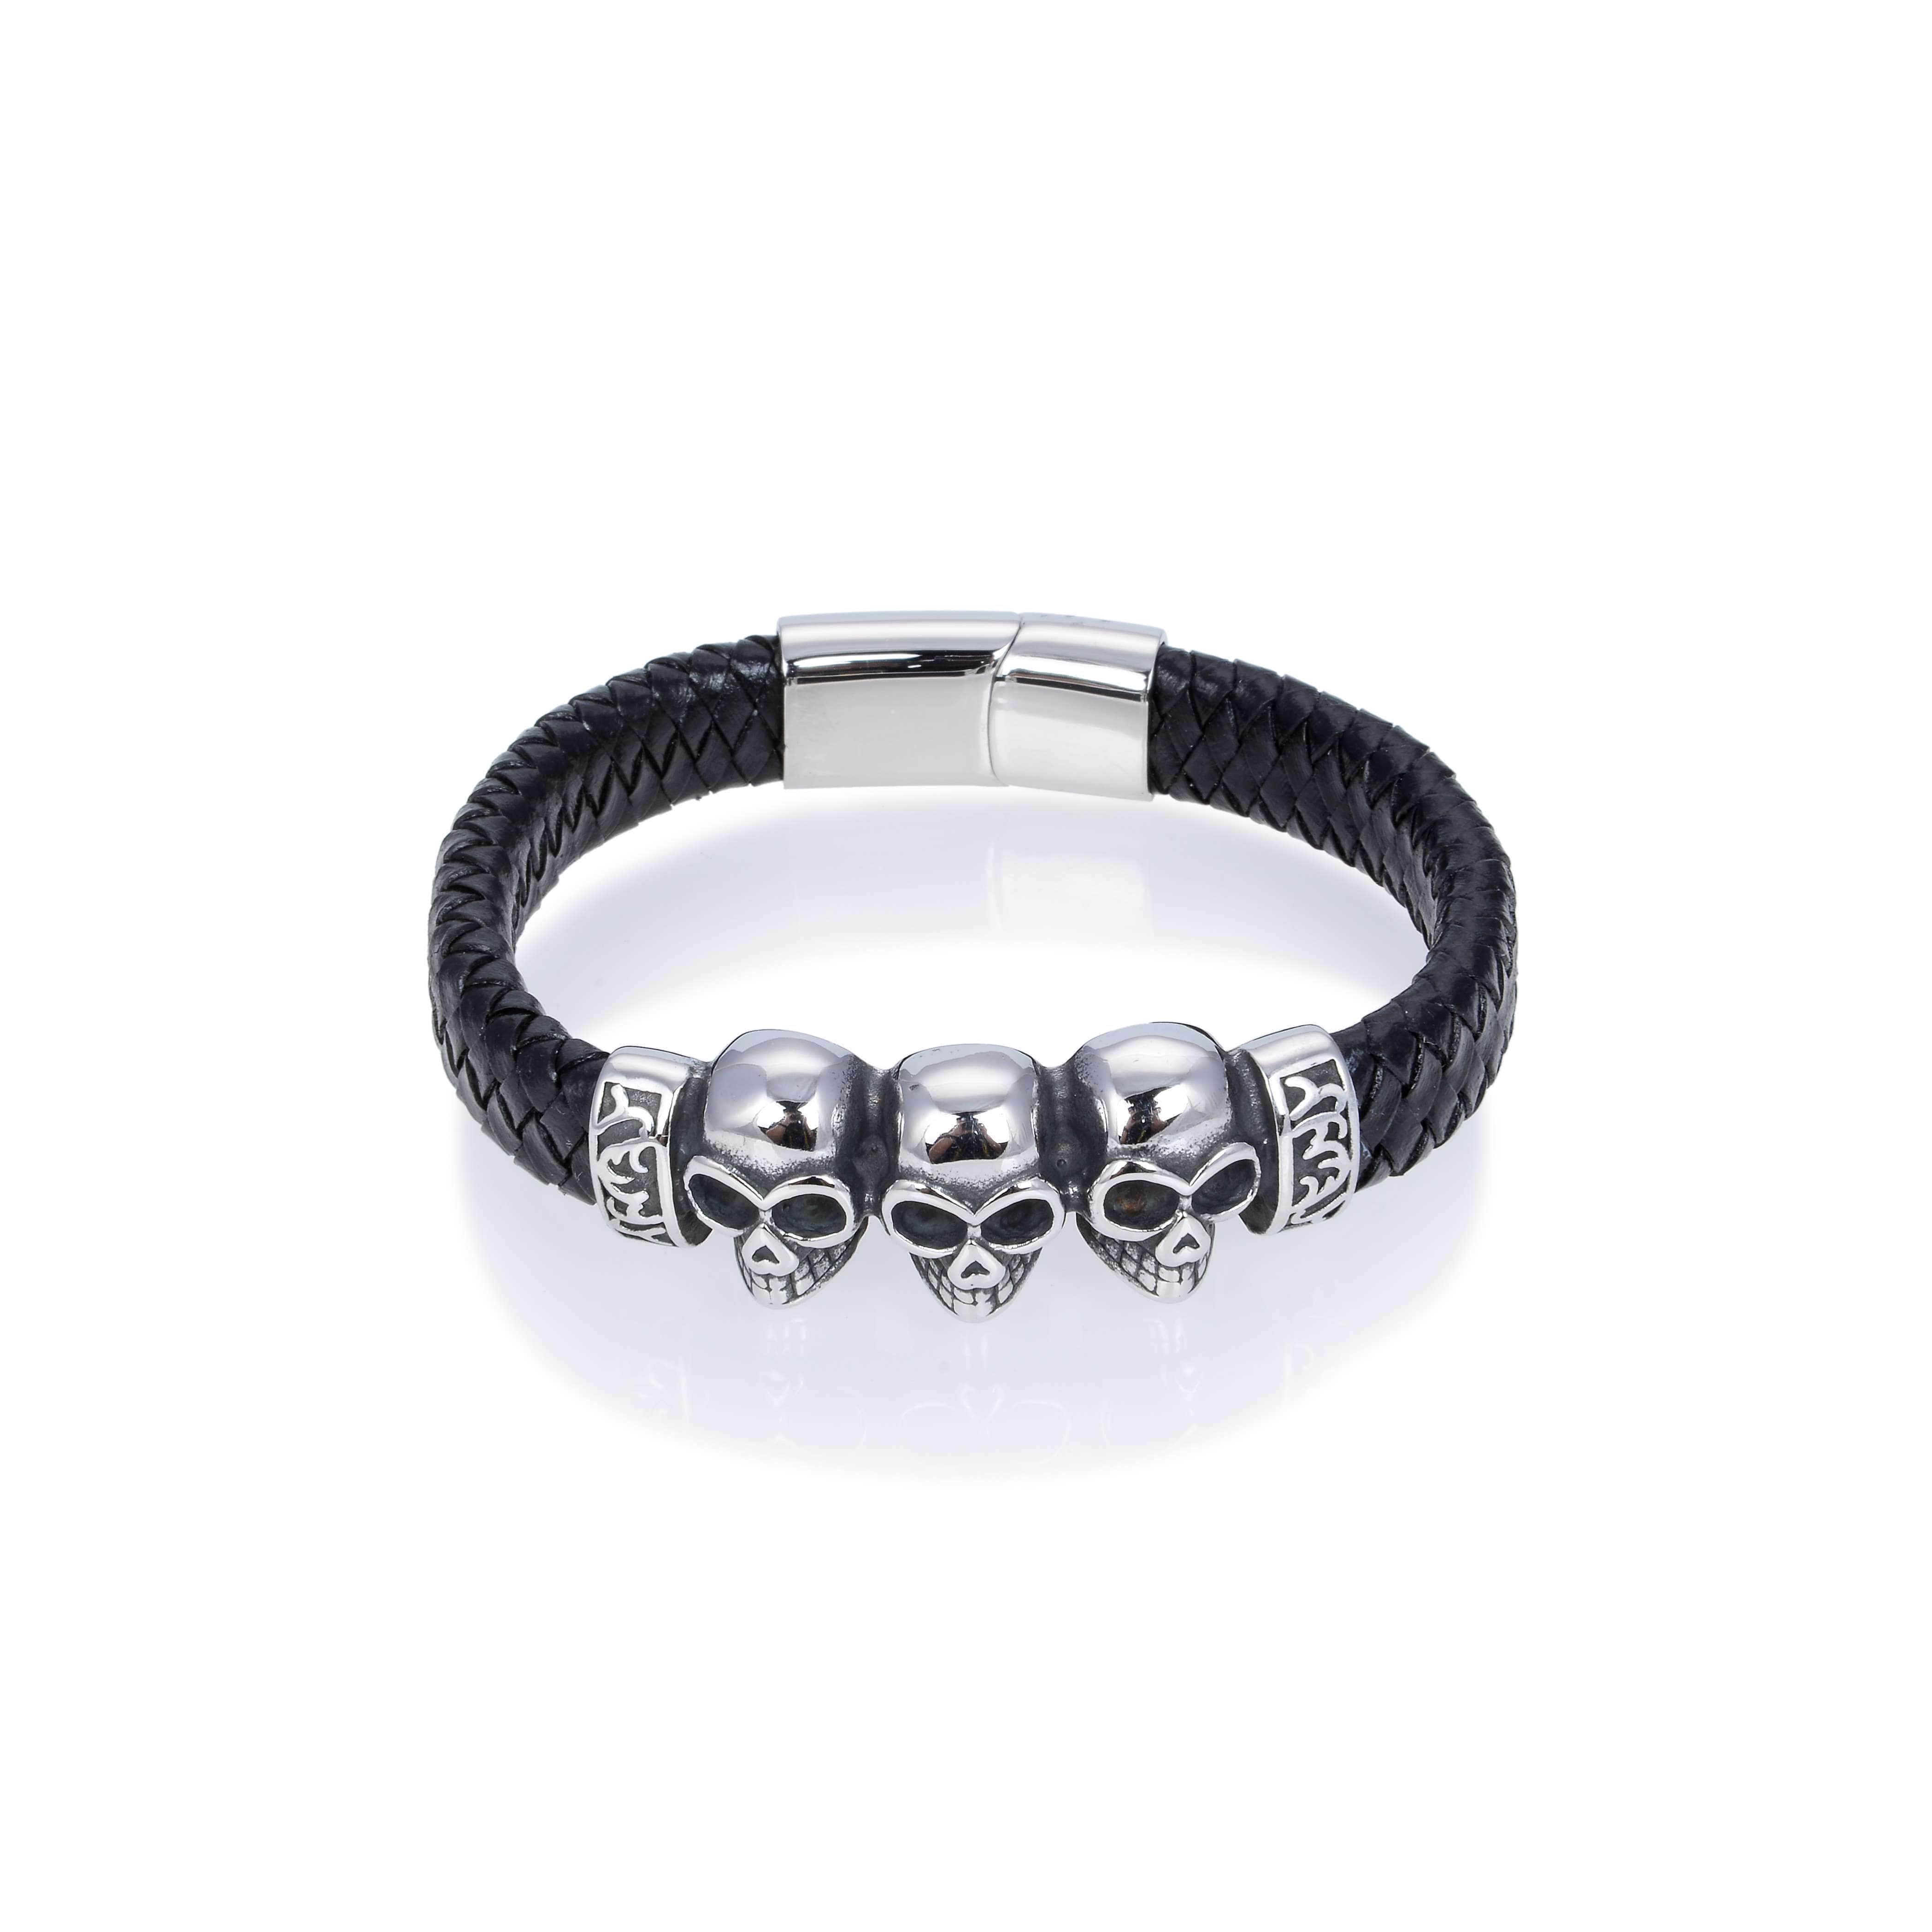 Kalifano Steel Hearts Jewelry Steel Hearts Tri-Skull Chain Black Leather Bracelet SHB200-85